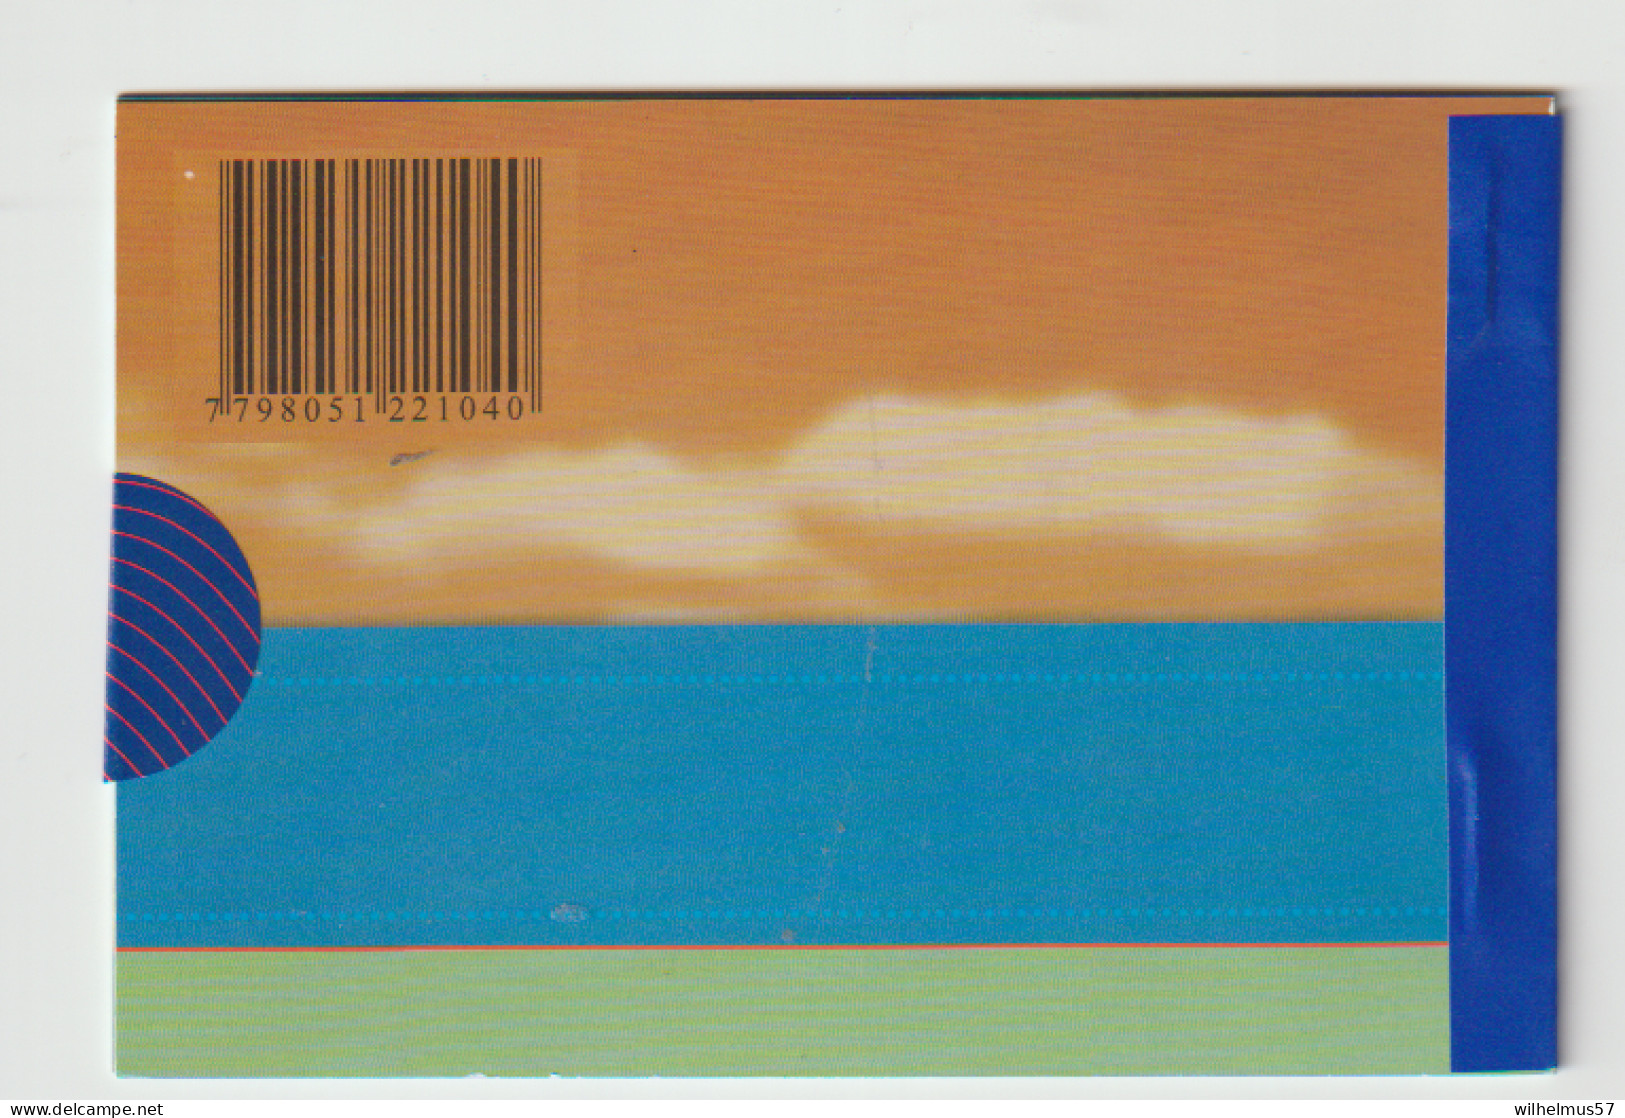 Argentina   2001 Booklet Saint Exupery Unopened  MNH - Carnets